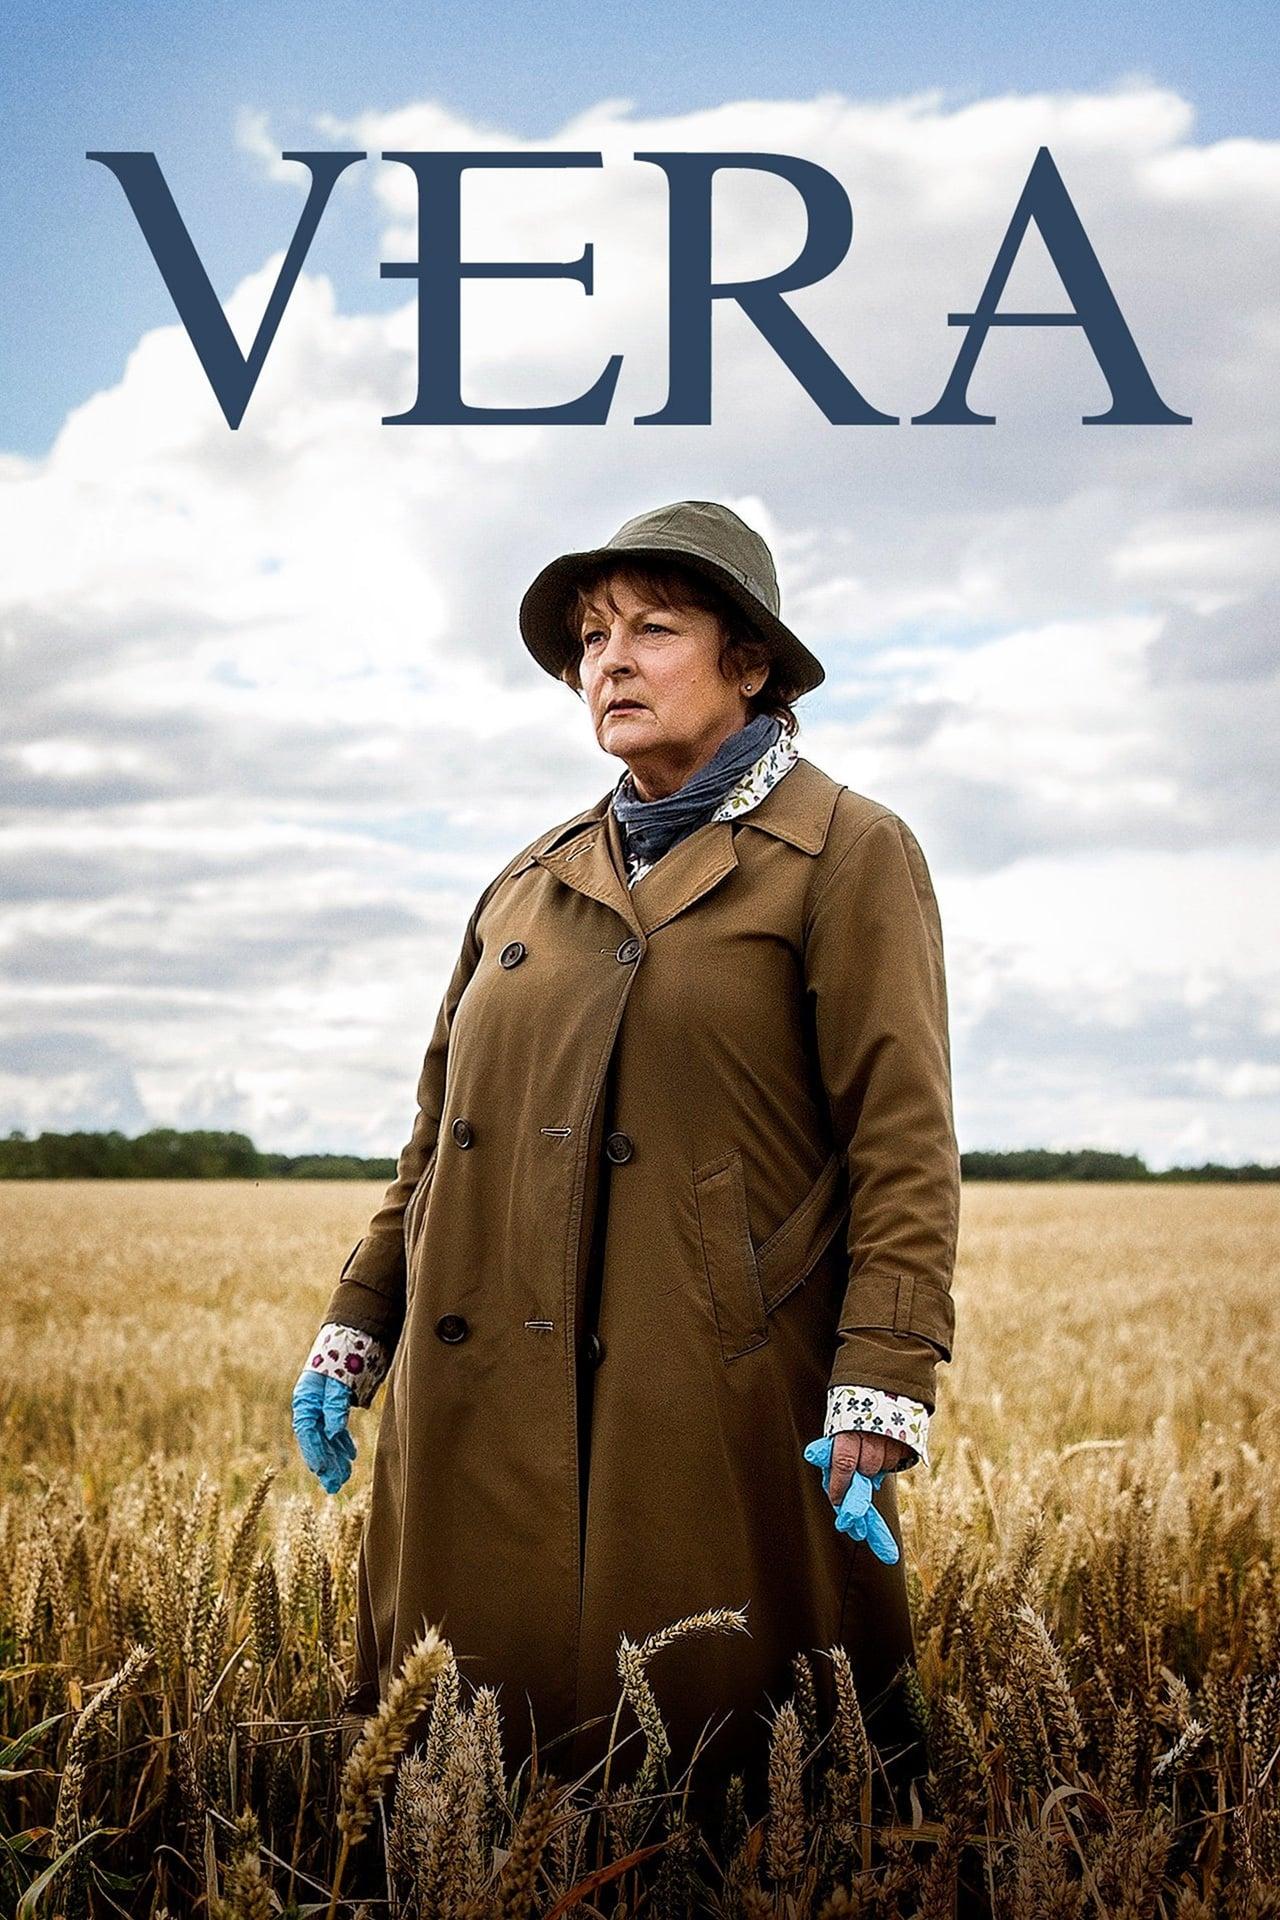 Vera poster